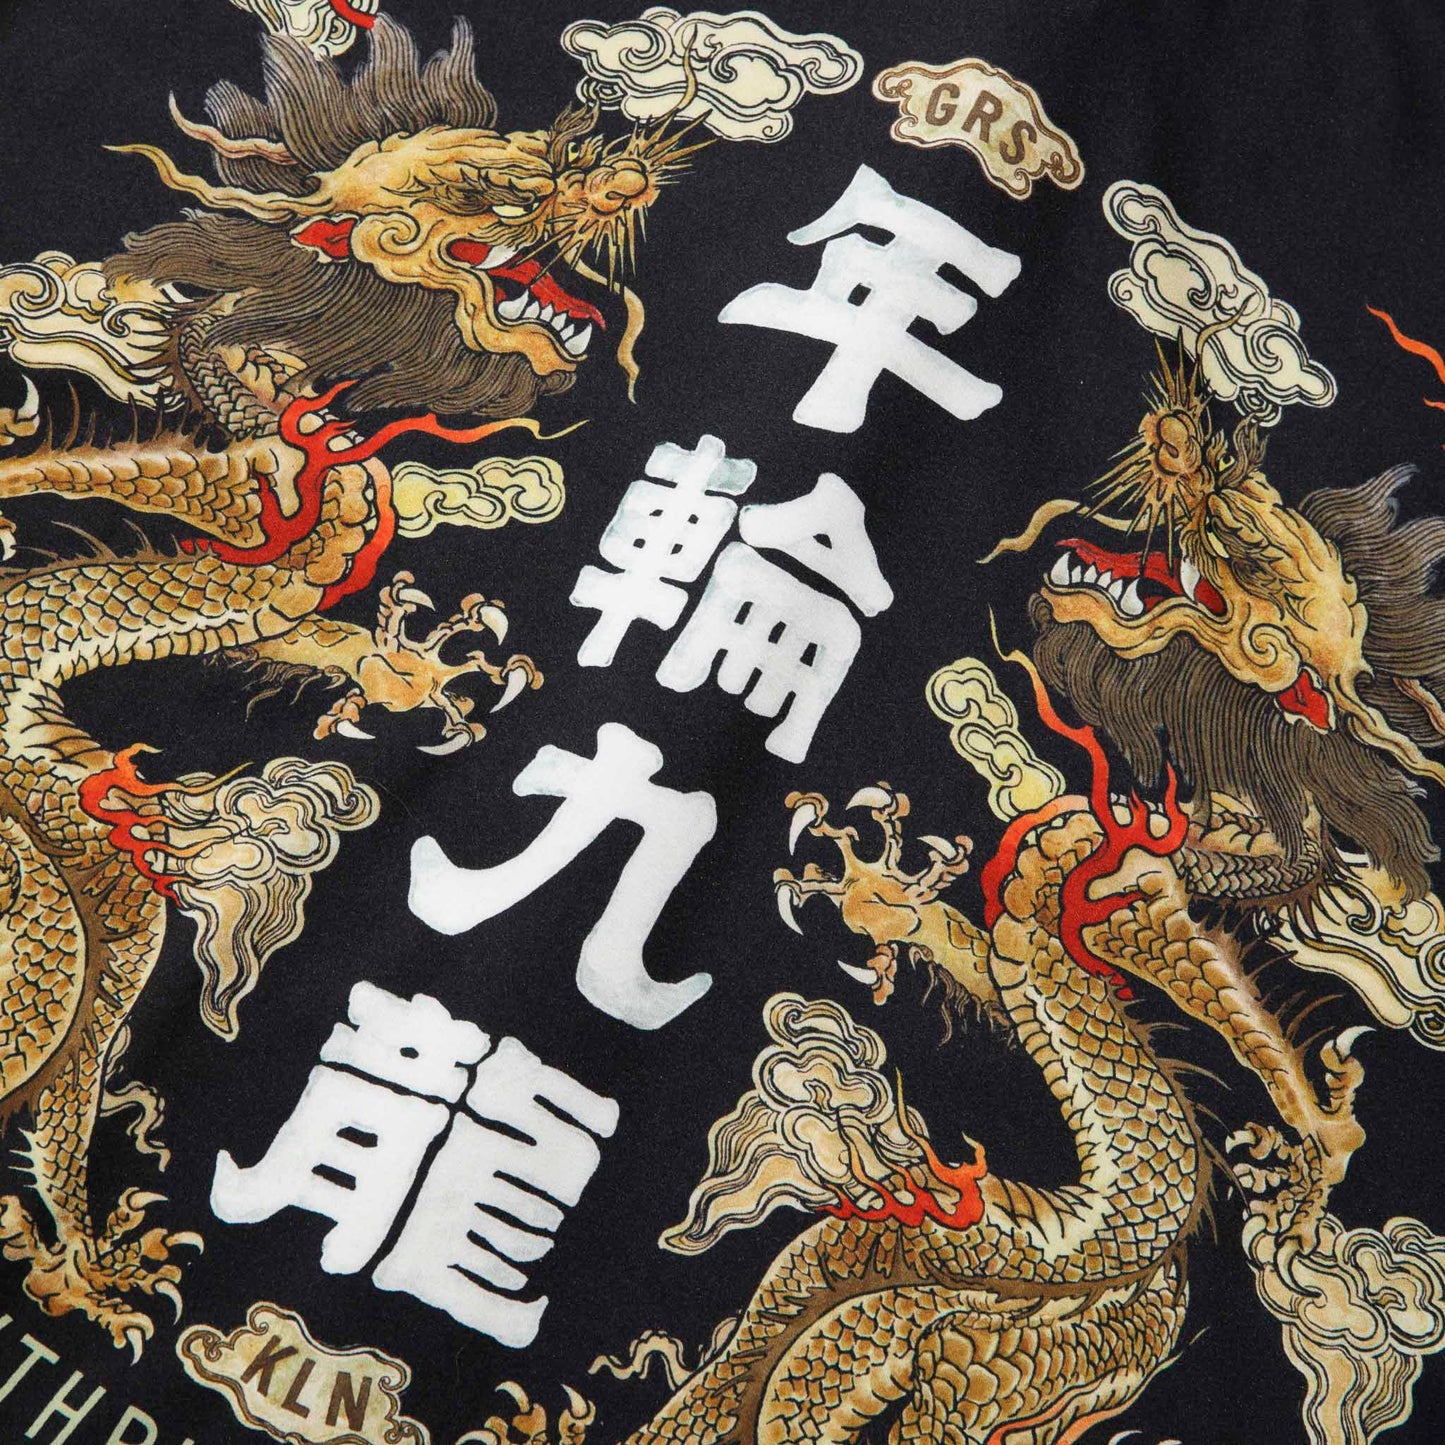 Kowloon Double Dragon Overprint Shirt